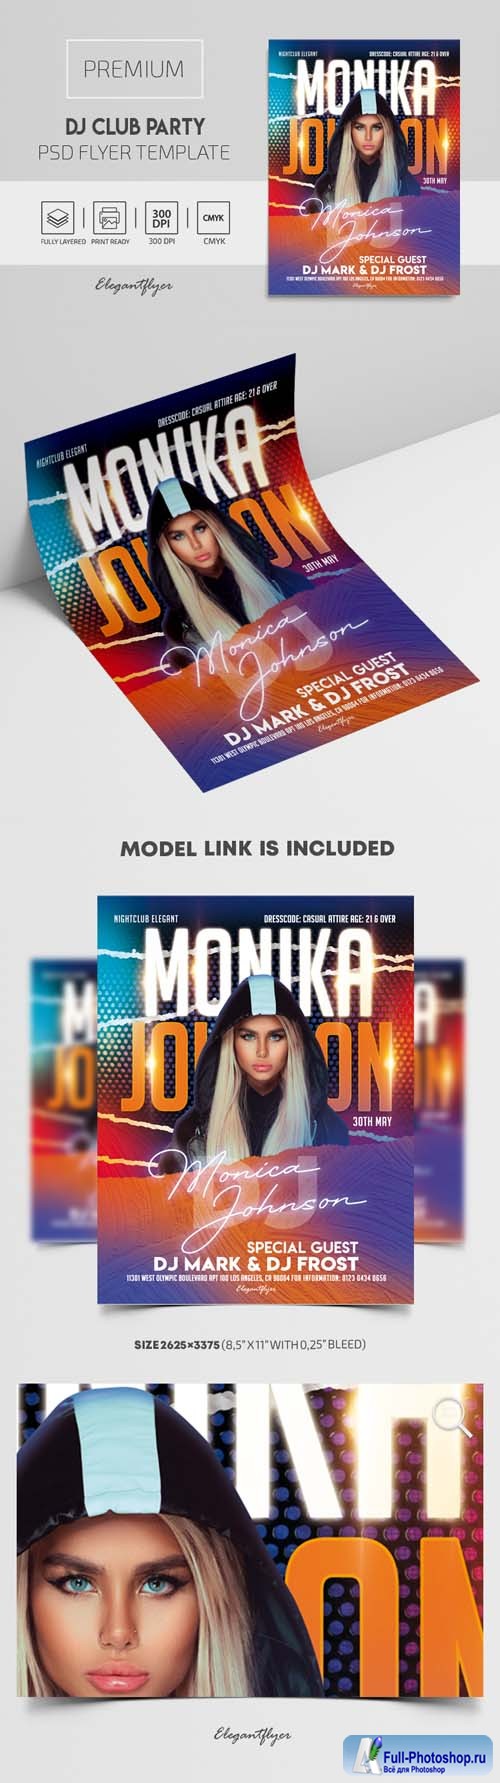 DJ Club Party Premium PSD Flyer Template